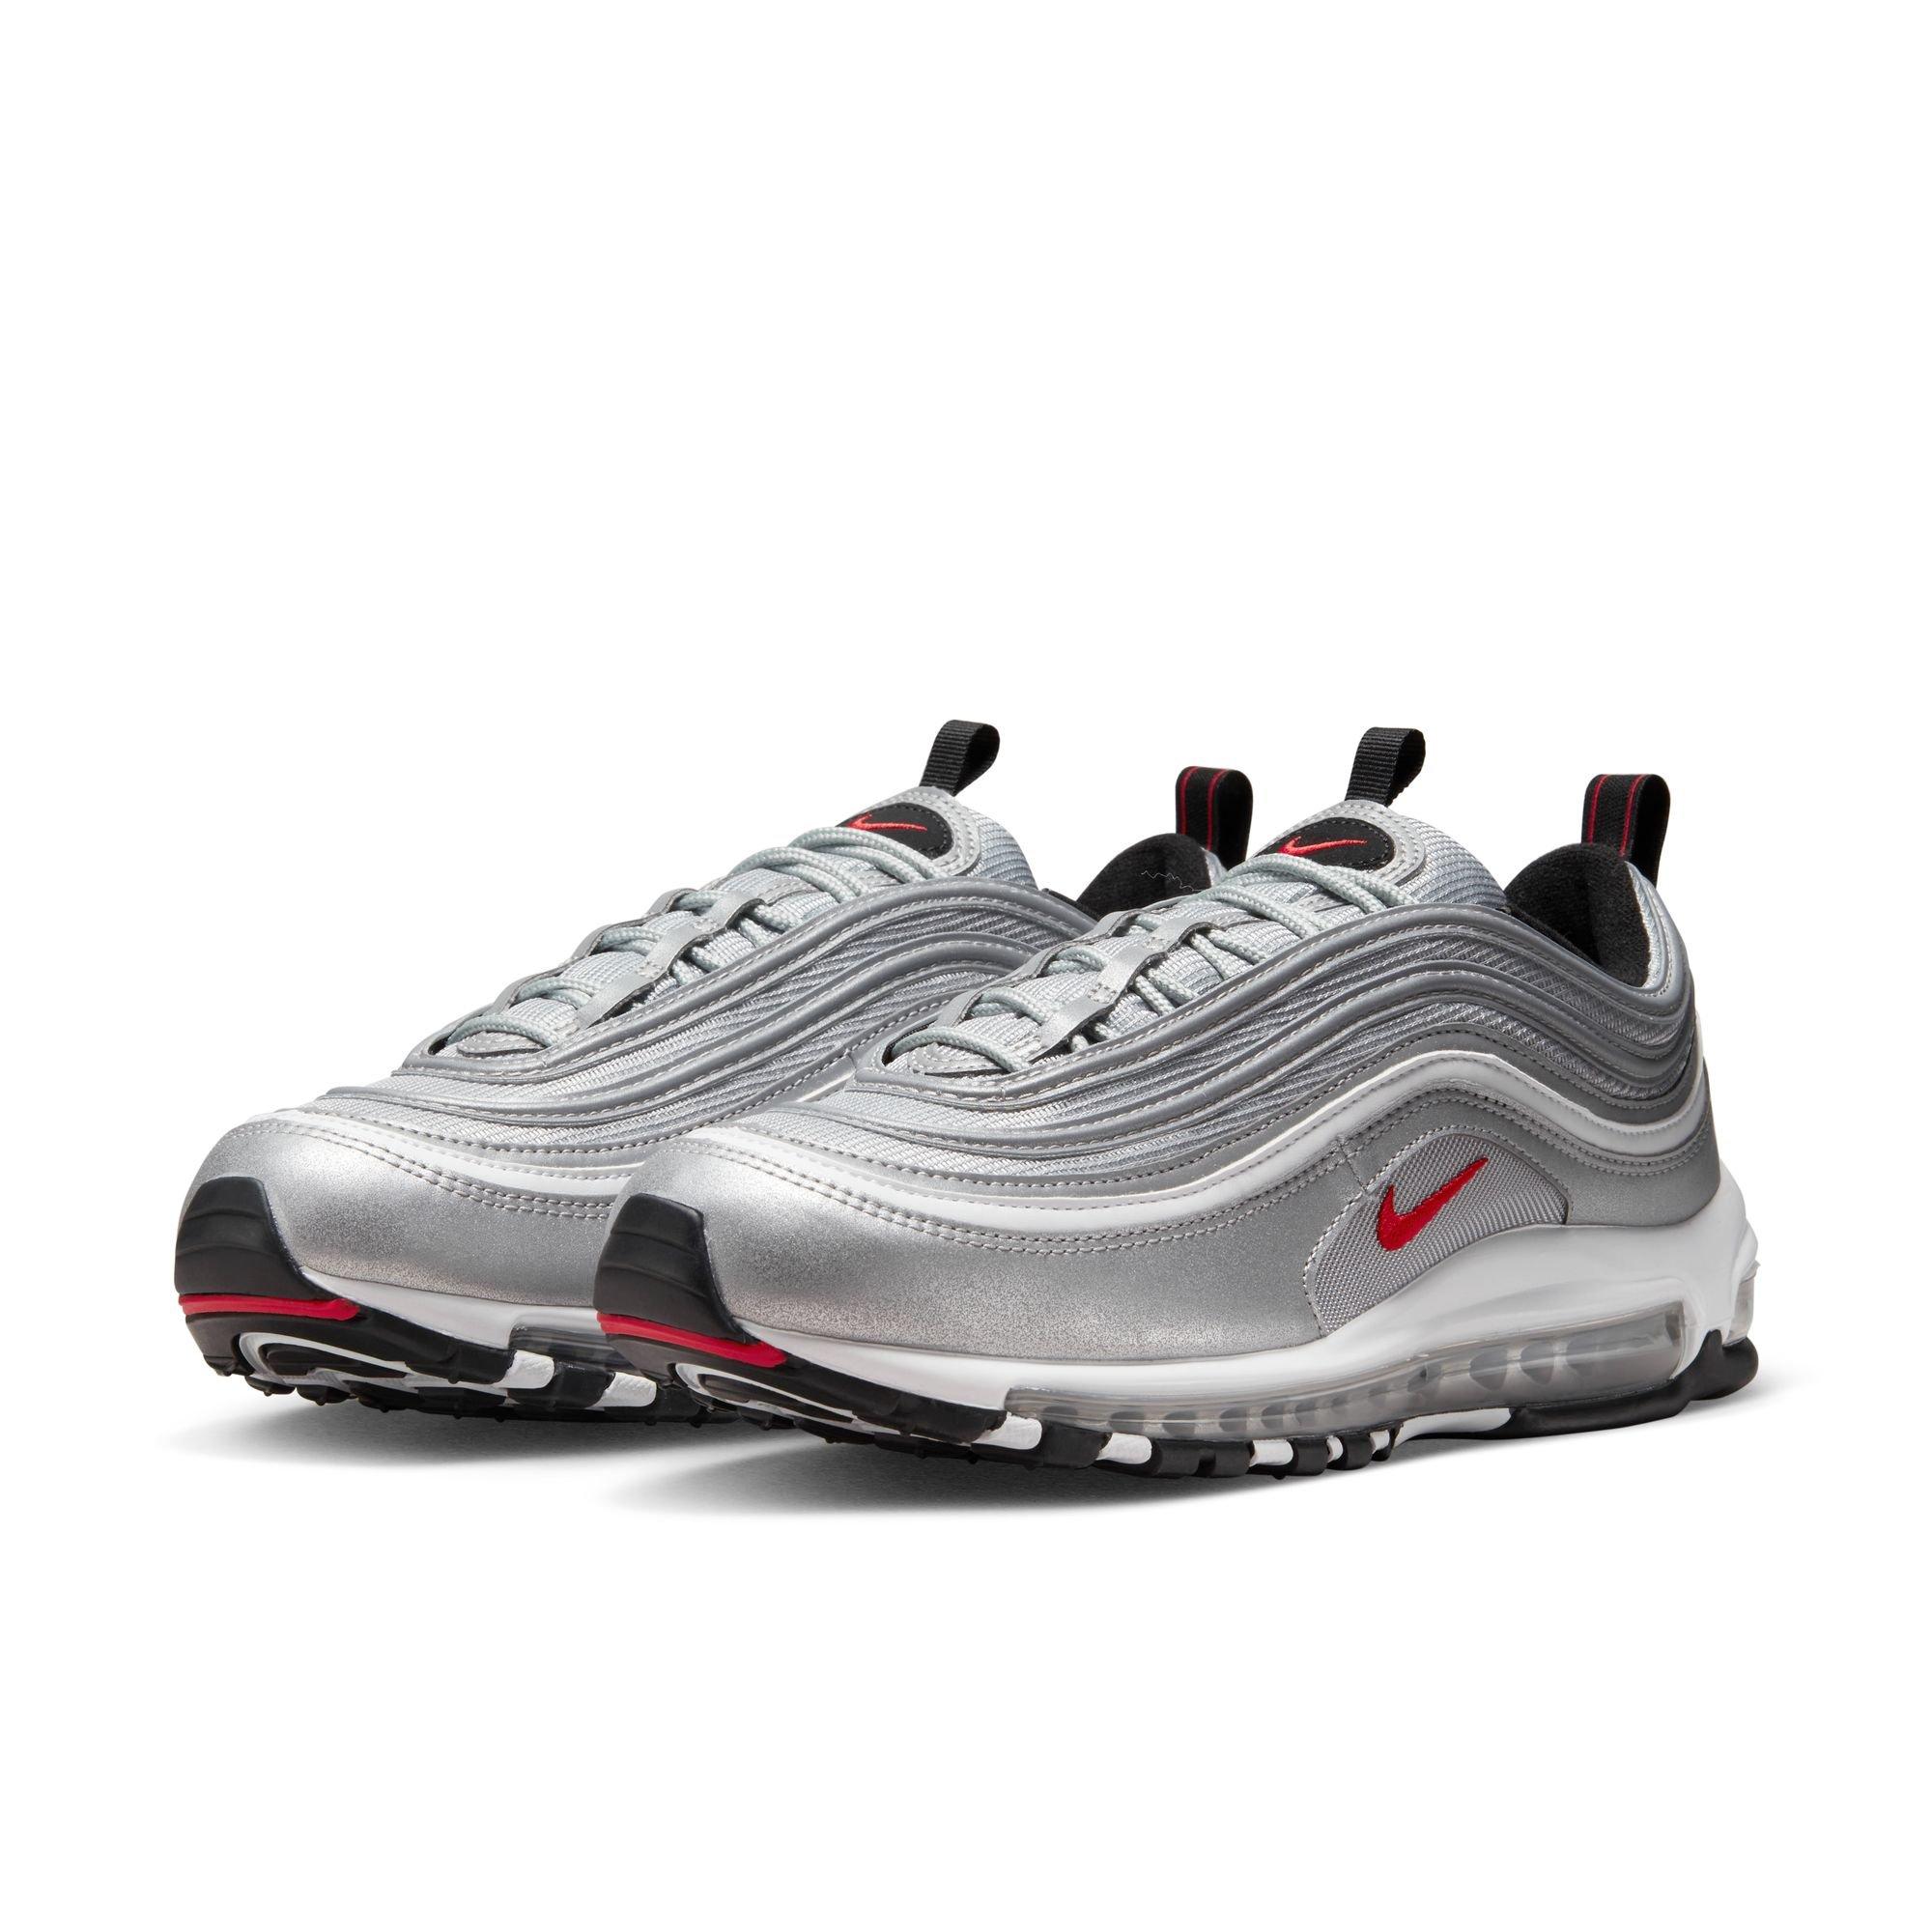 Nike Air Max 97 "Metallic Silver/University Red/Black" ​Men's Shoe​